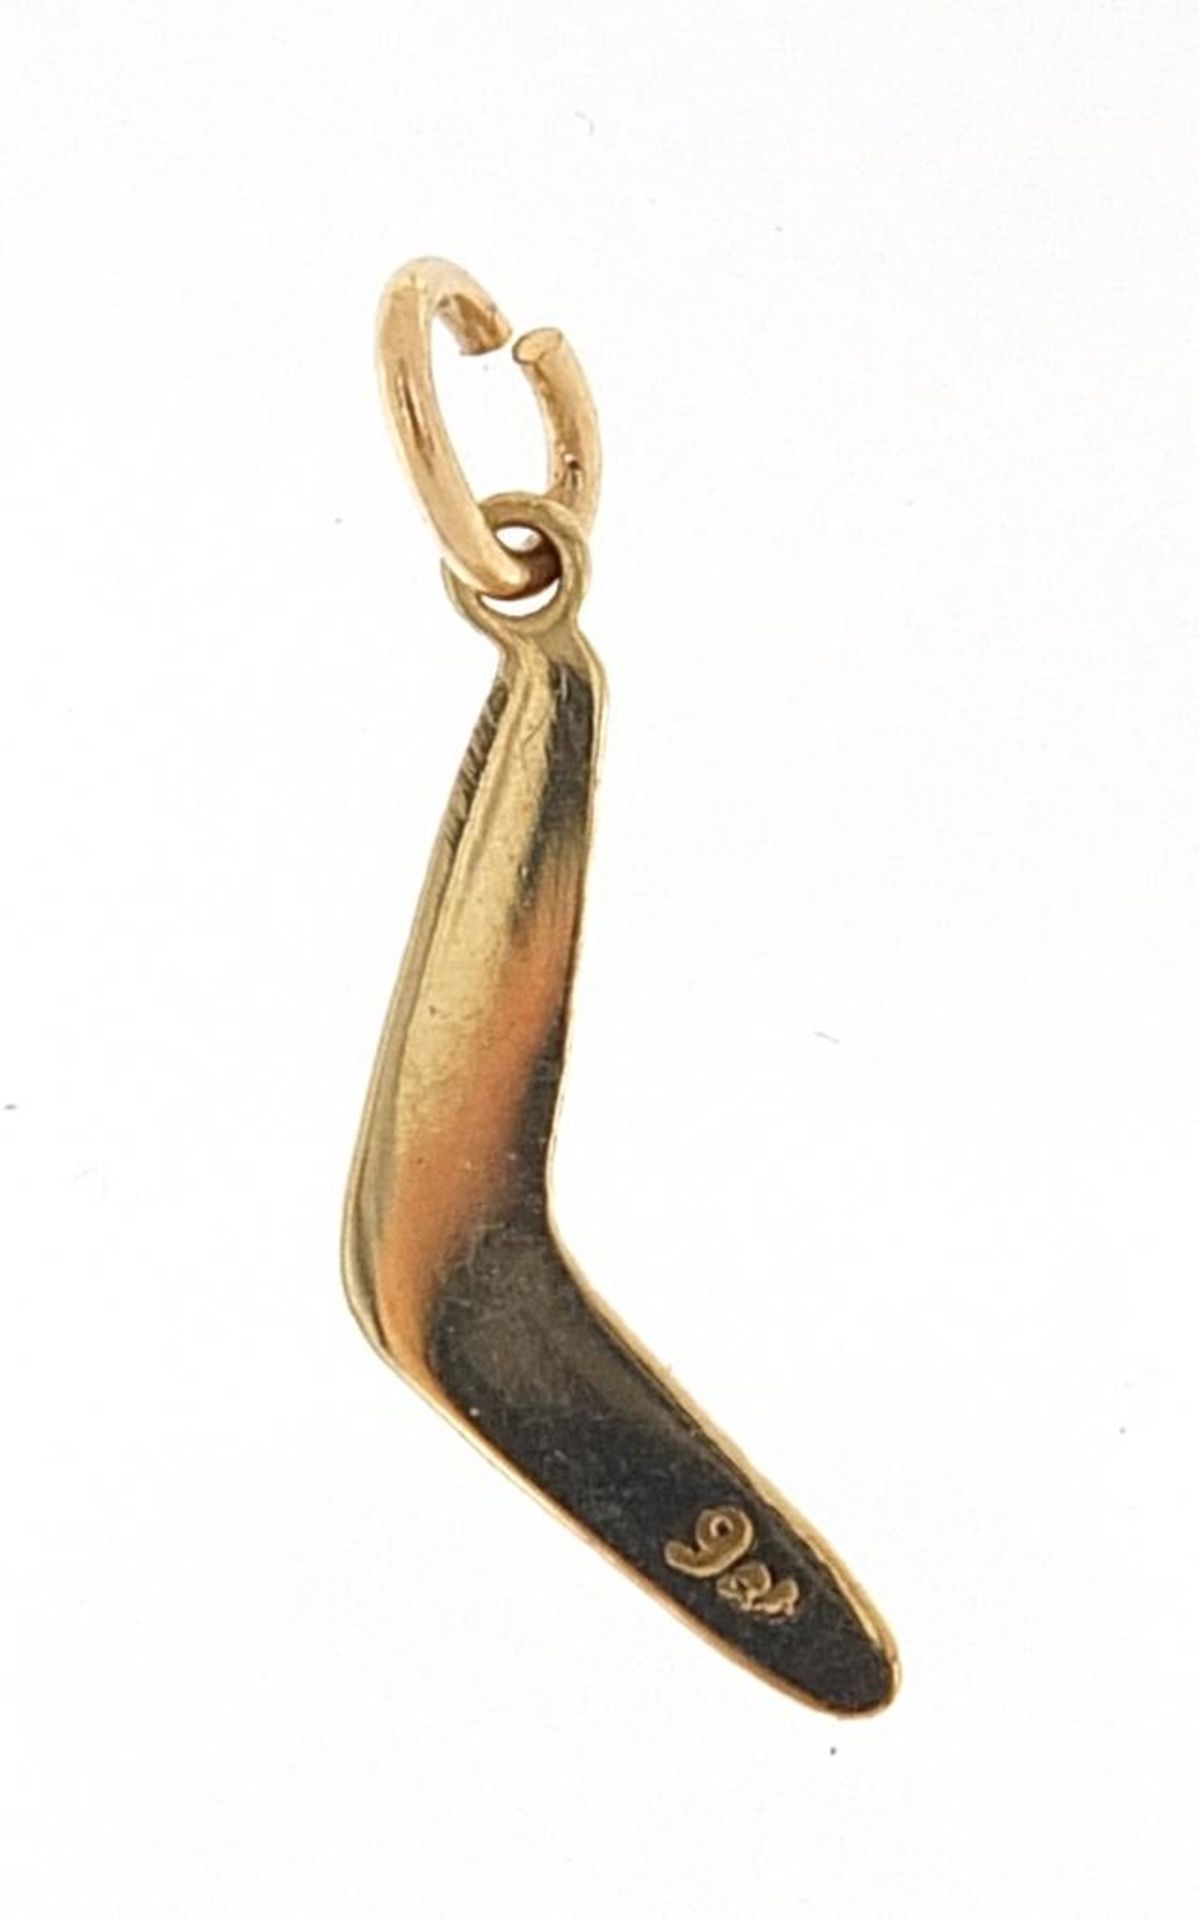 9ct gold boomerang charm, 1.9cm high, 0.5g - Image 2 of 2